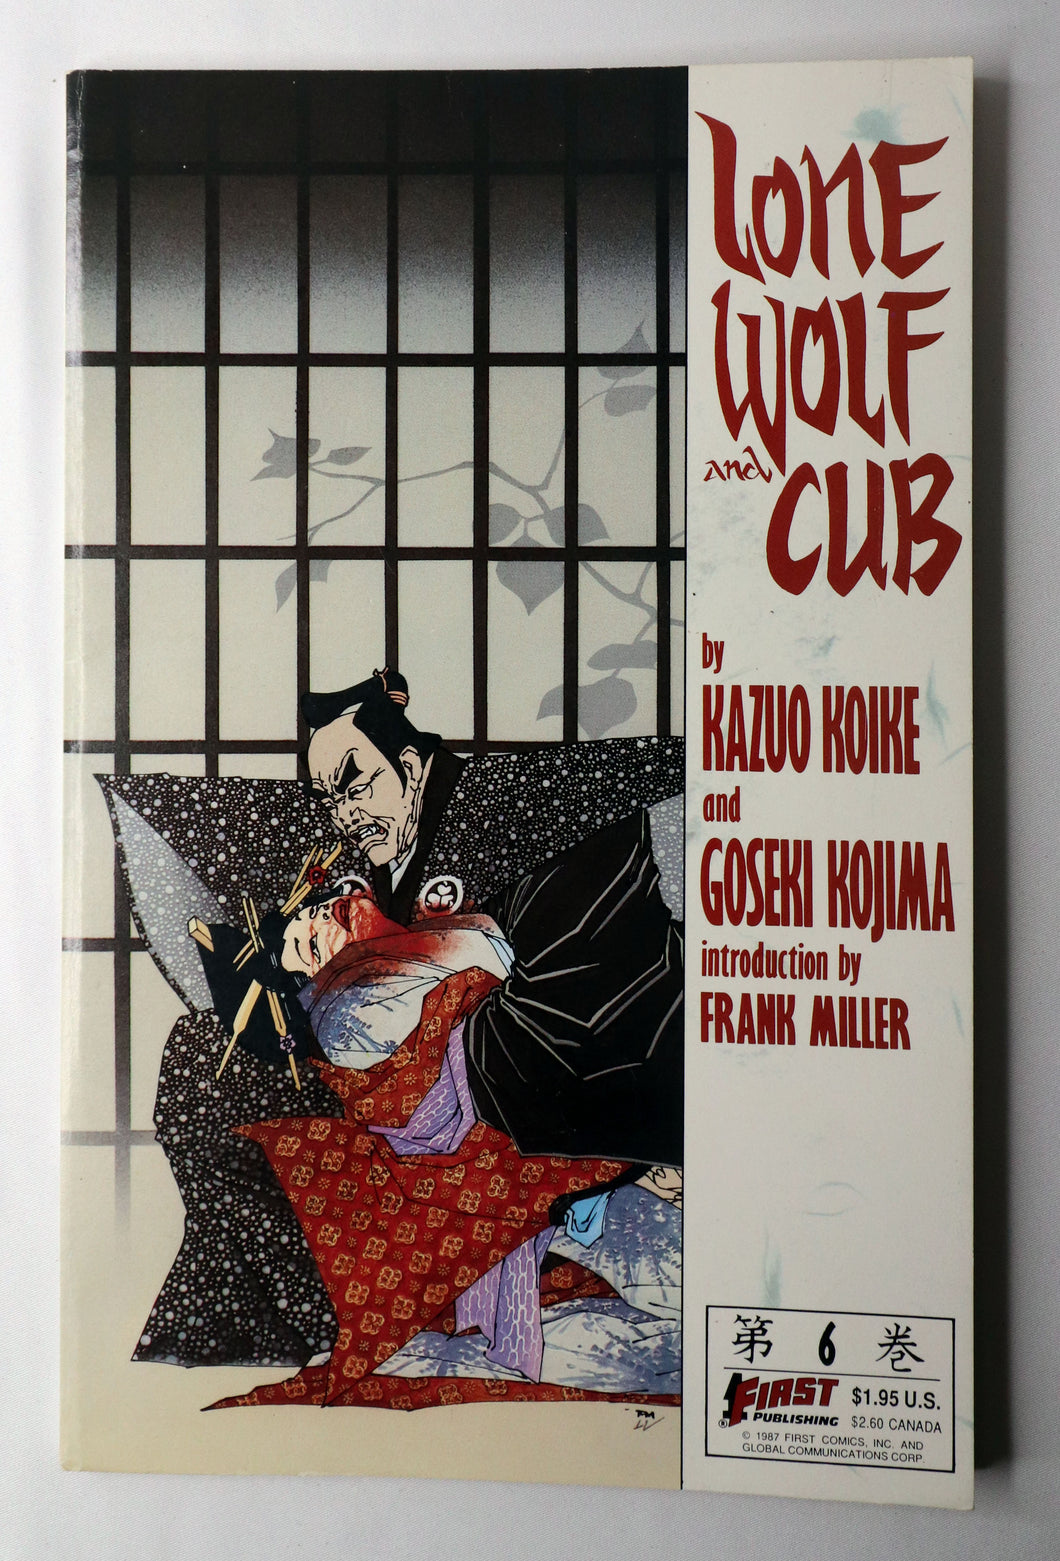 Graphic Novel Comic TPB - Action - Lone Wolf And Cub - #6 First Publishing - Kioke & Kojima - VG+ - 1st Printing 1987 - Frank Miller